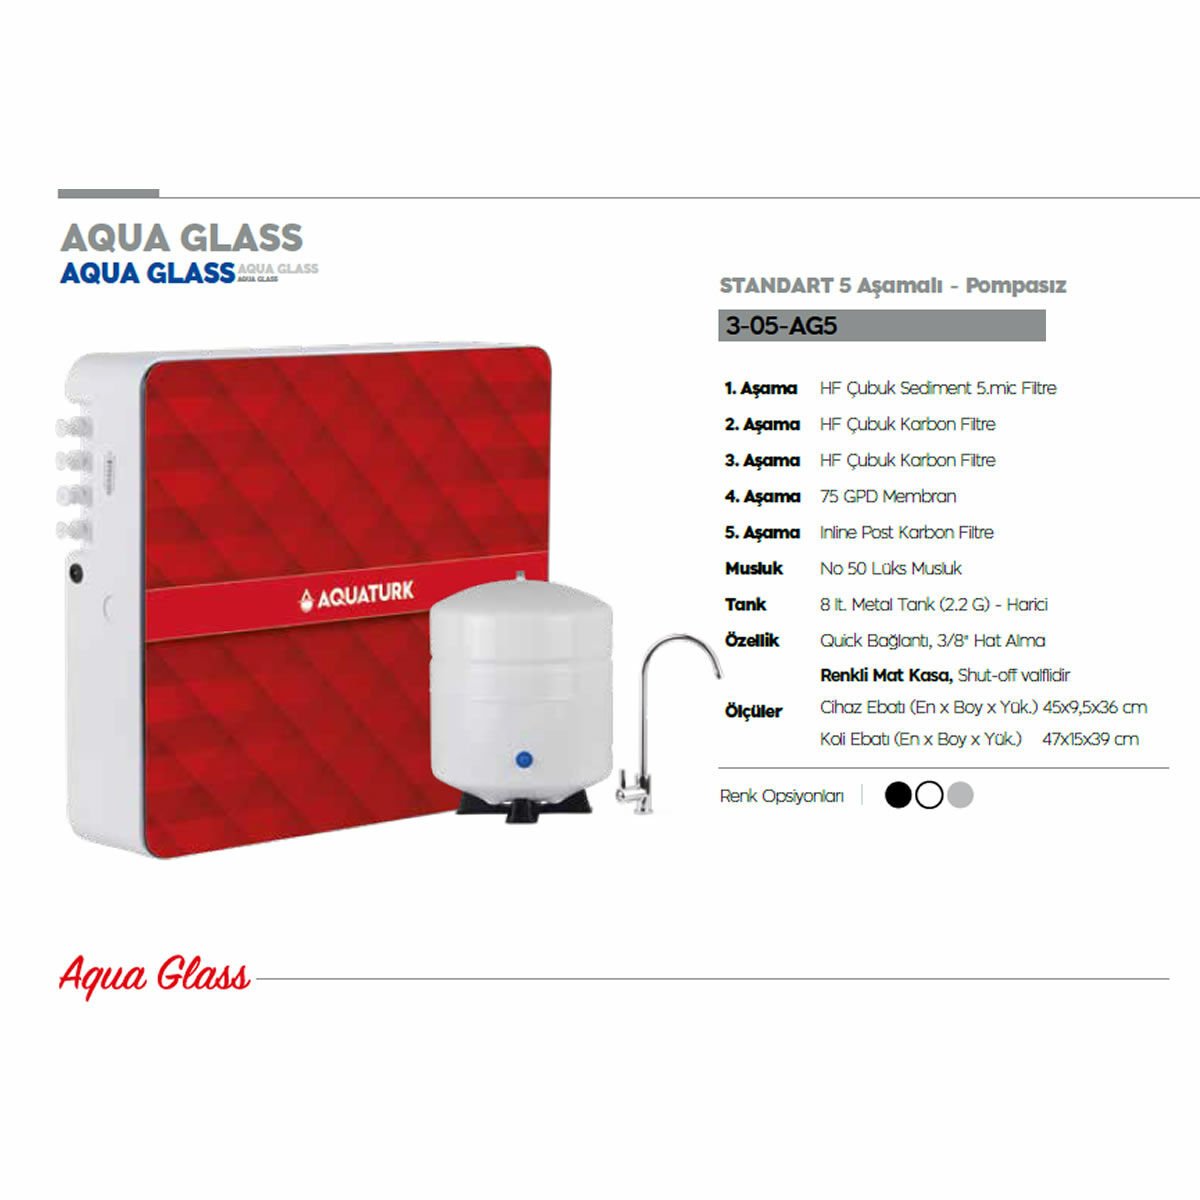 AQUA GLASS STANDART 5 Aşamalı - Pompasız 3-05-AG5